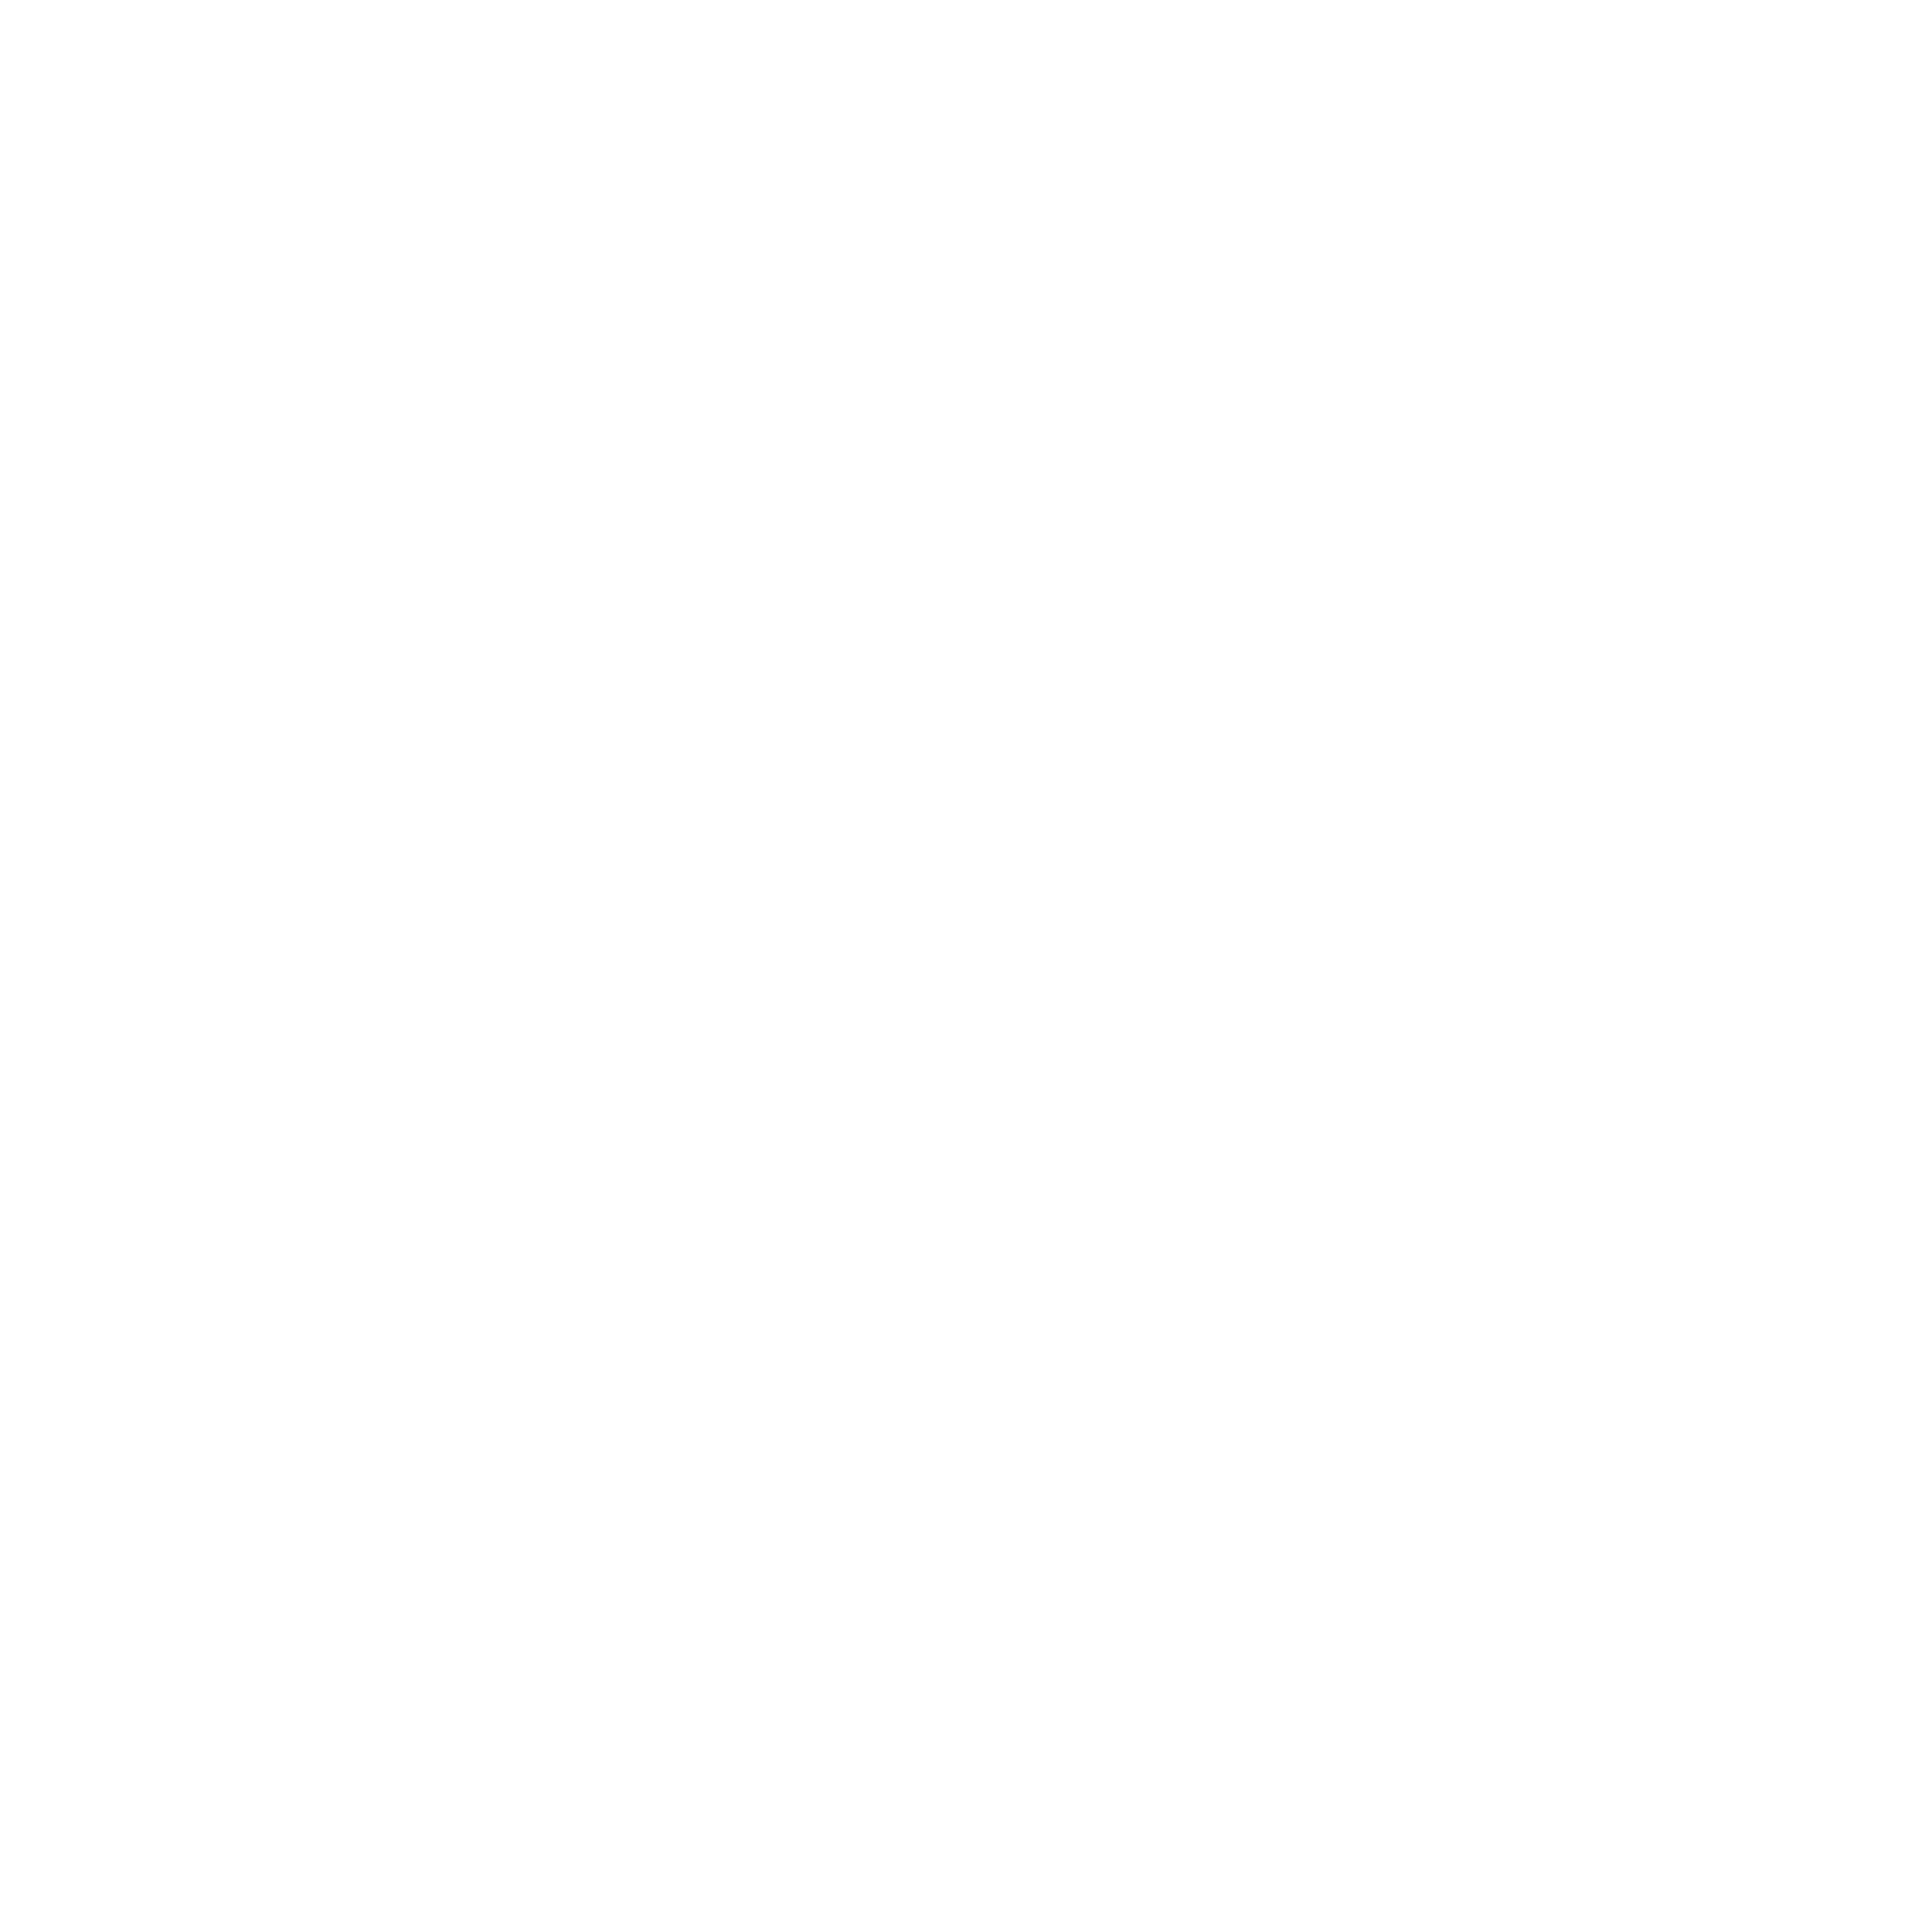 Electric Fish | Brett Horrocks